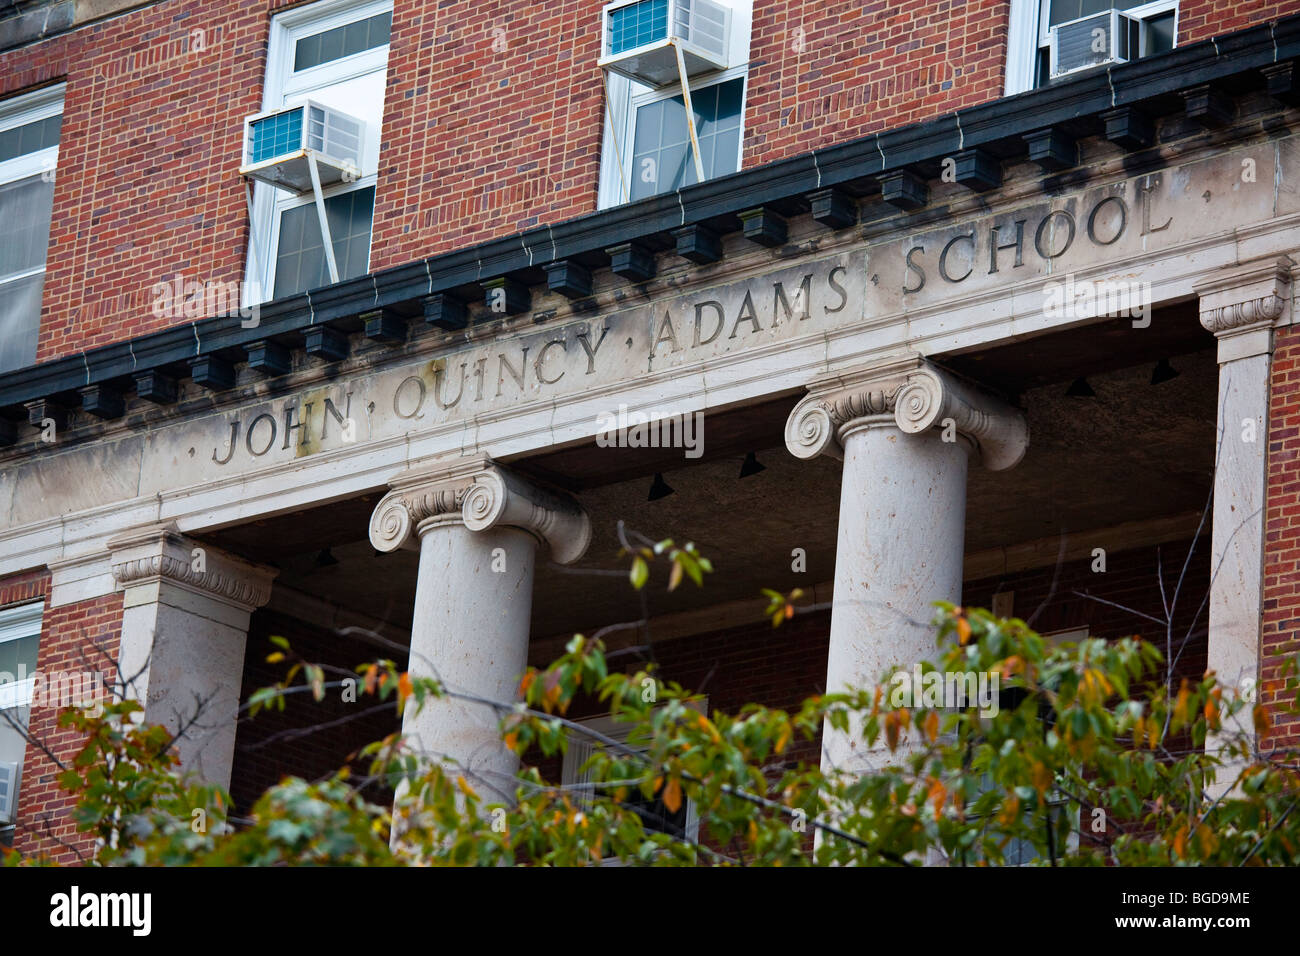 John Quincy Adams Elementary School in Washington DC Stock Photo